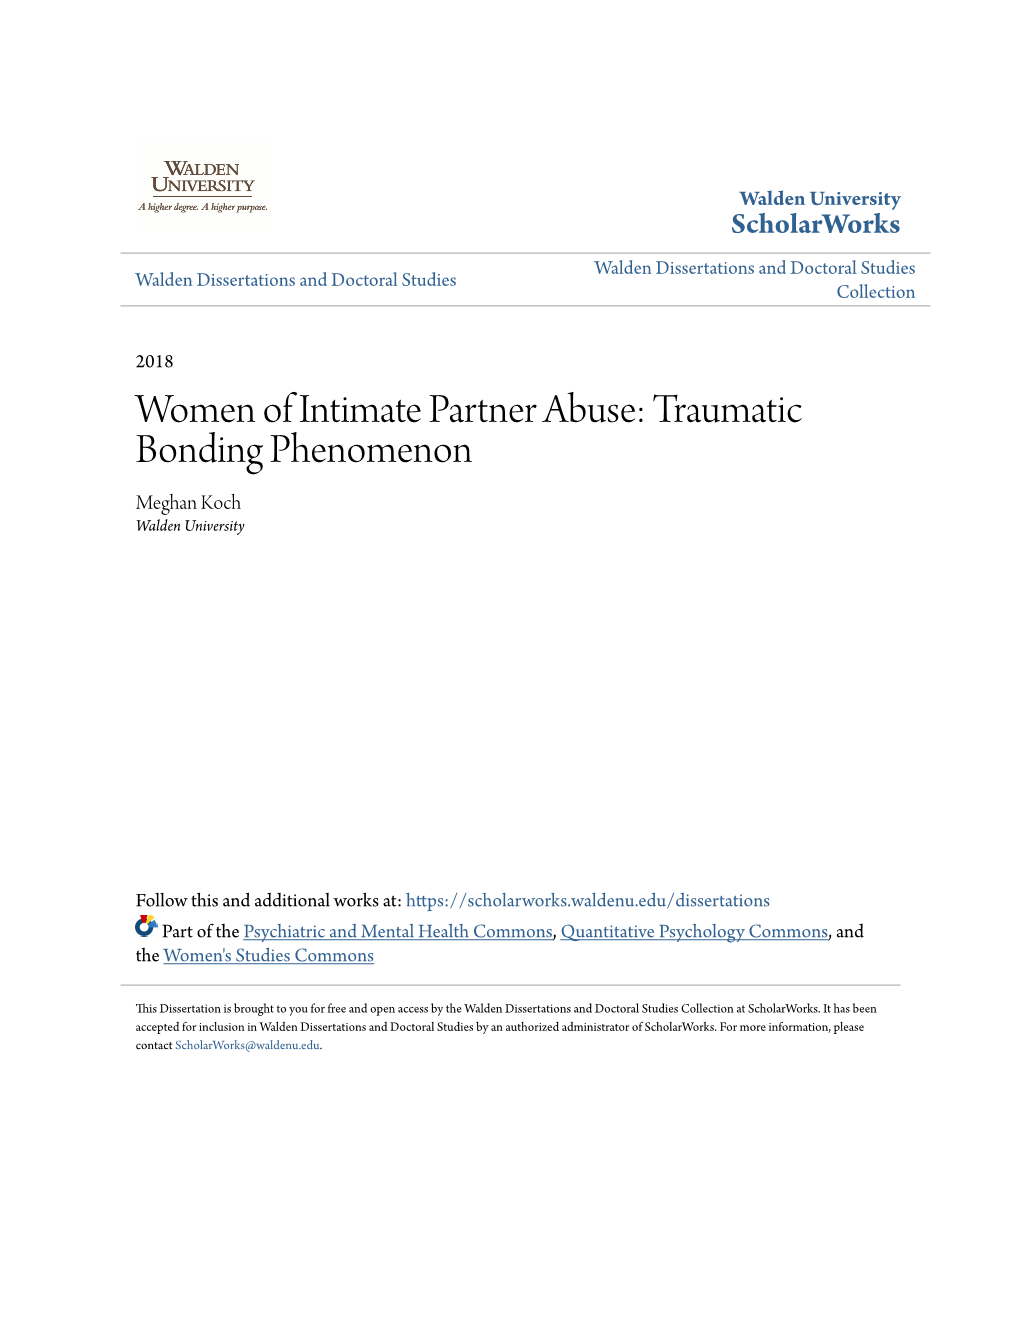 Women of Intimate Partner Abuse: Traumatic Bonding Phenomenon Meghan Koch Walden University